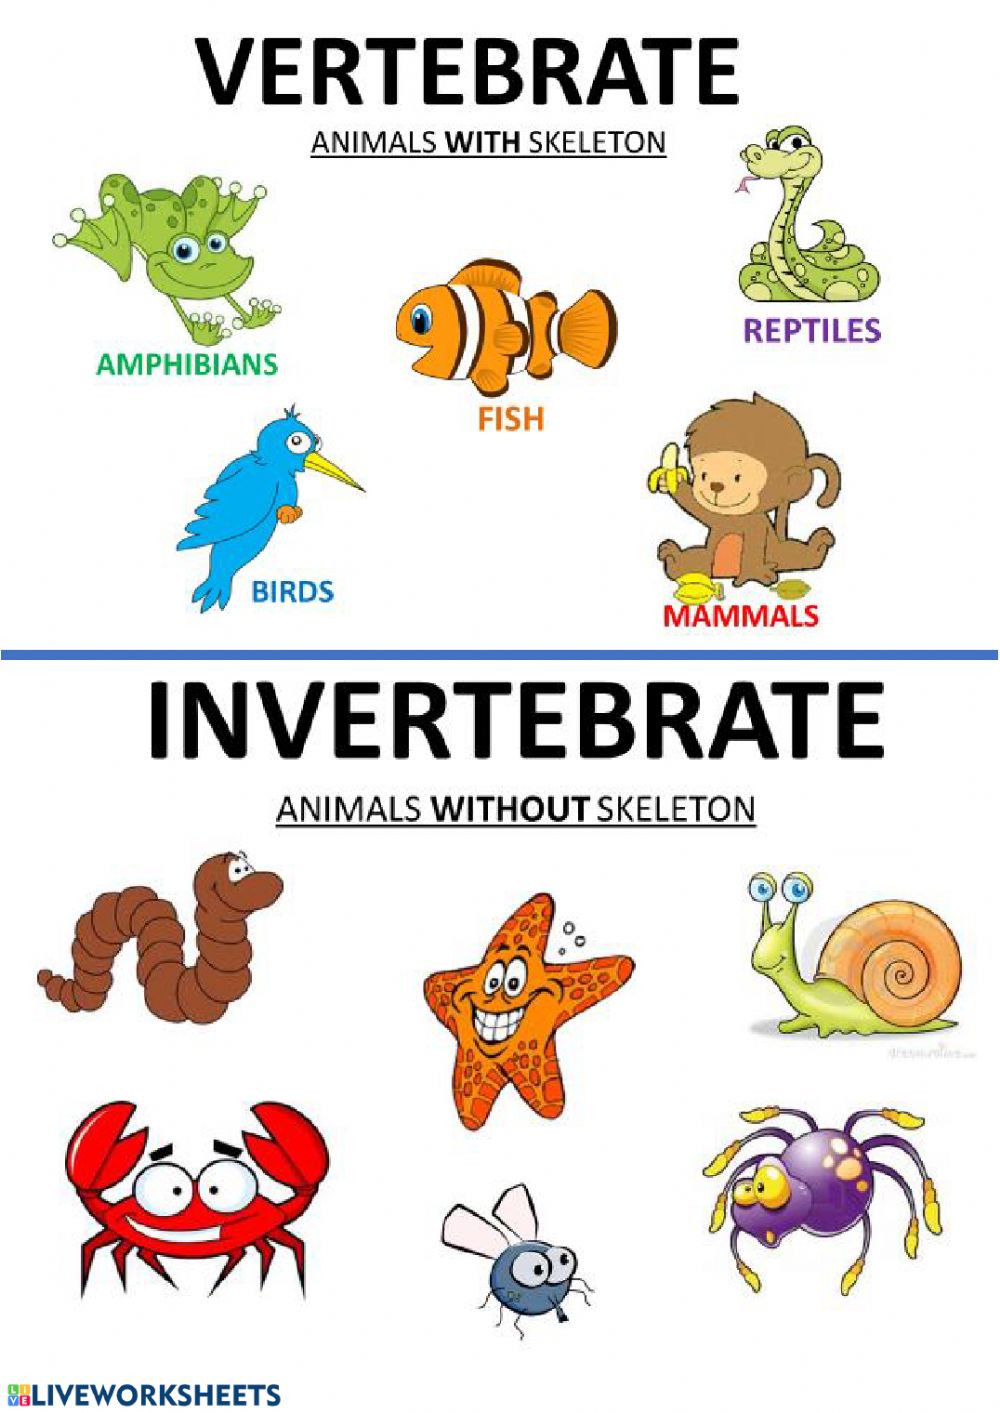 1-d-vertebrates-and-invertebrates-english-quizizz